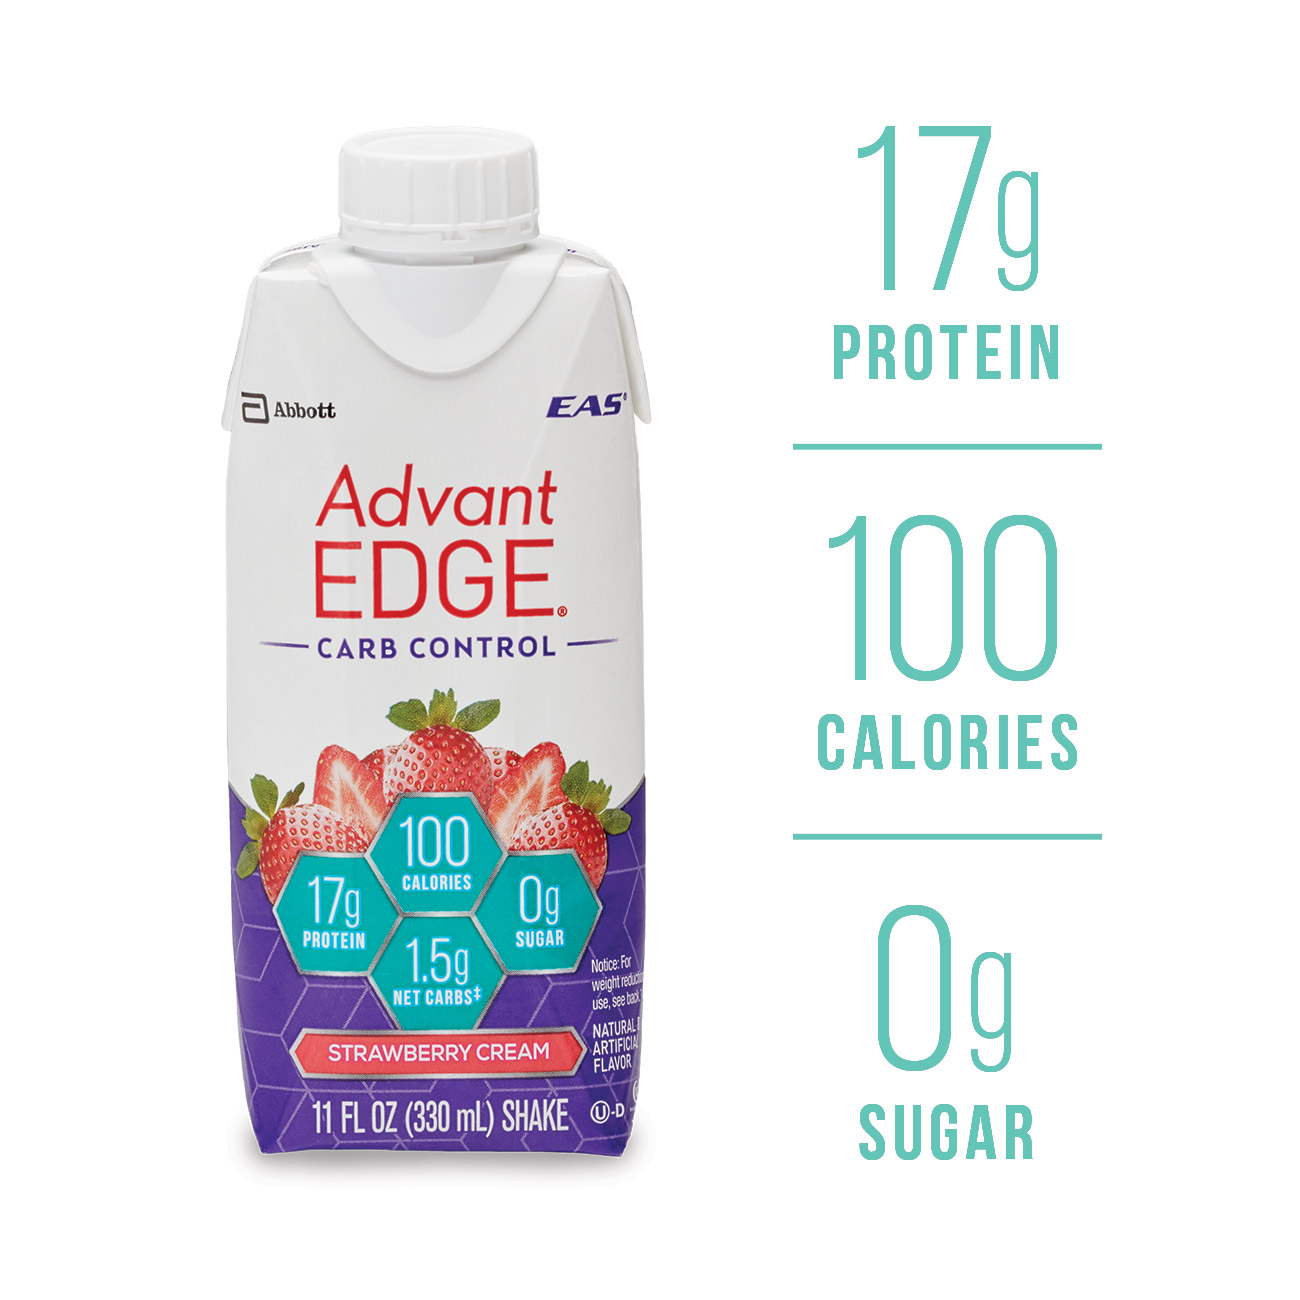 EAS AdvantEDGE Carb Control Protein Shake, Strawberry Cream, 17g Protein, 4 Ct - image 2 of 13